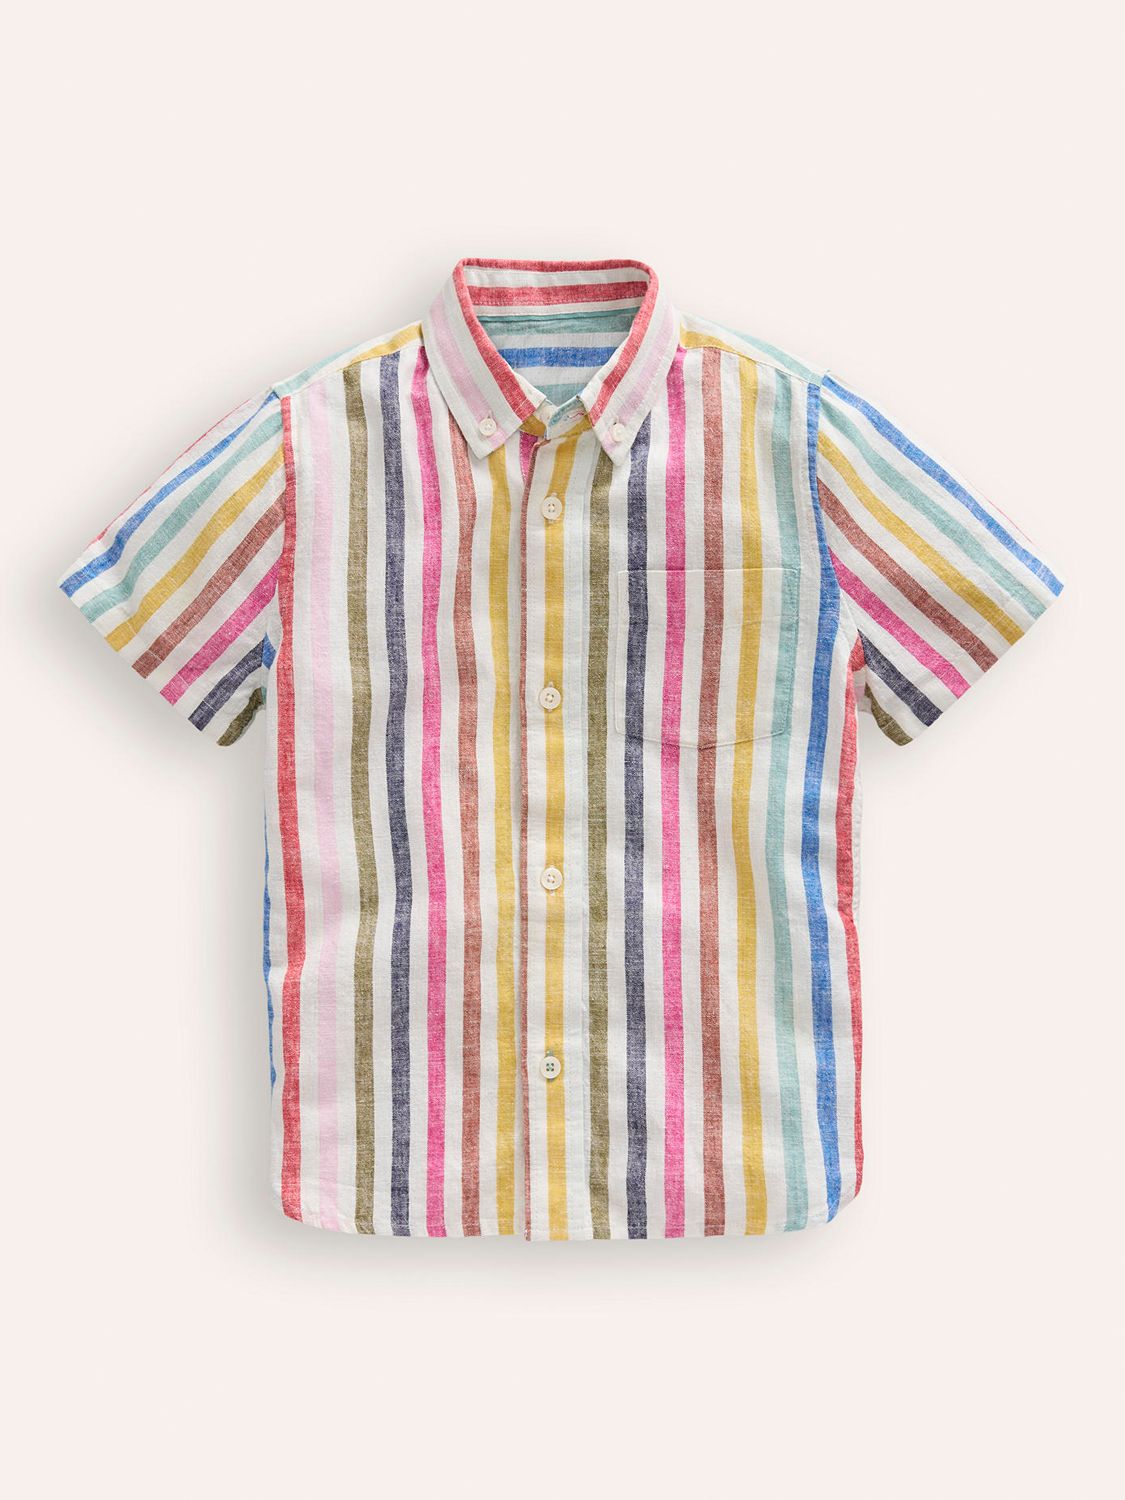 Mini Boden Kids' Cotton Linen Blend Shirt, Multi, 2-3 years